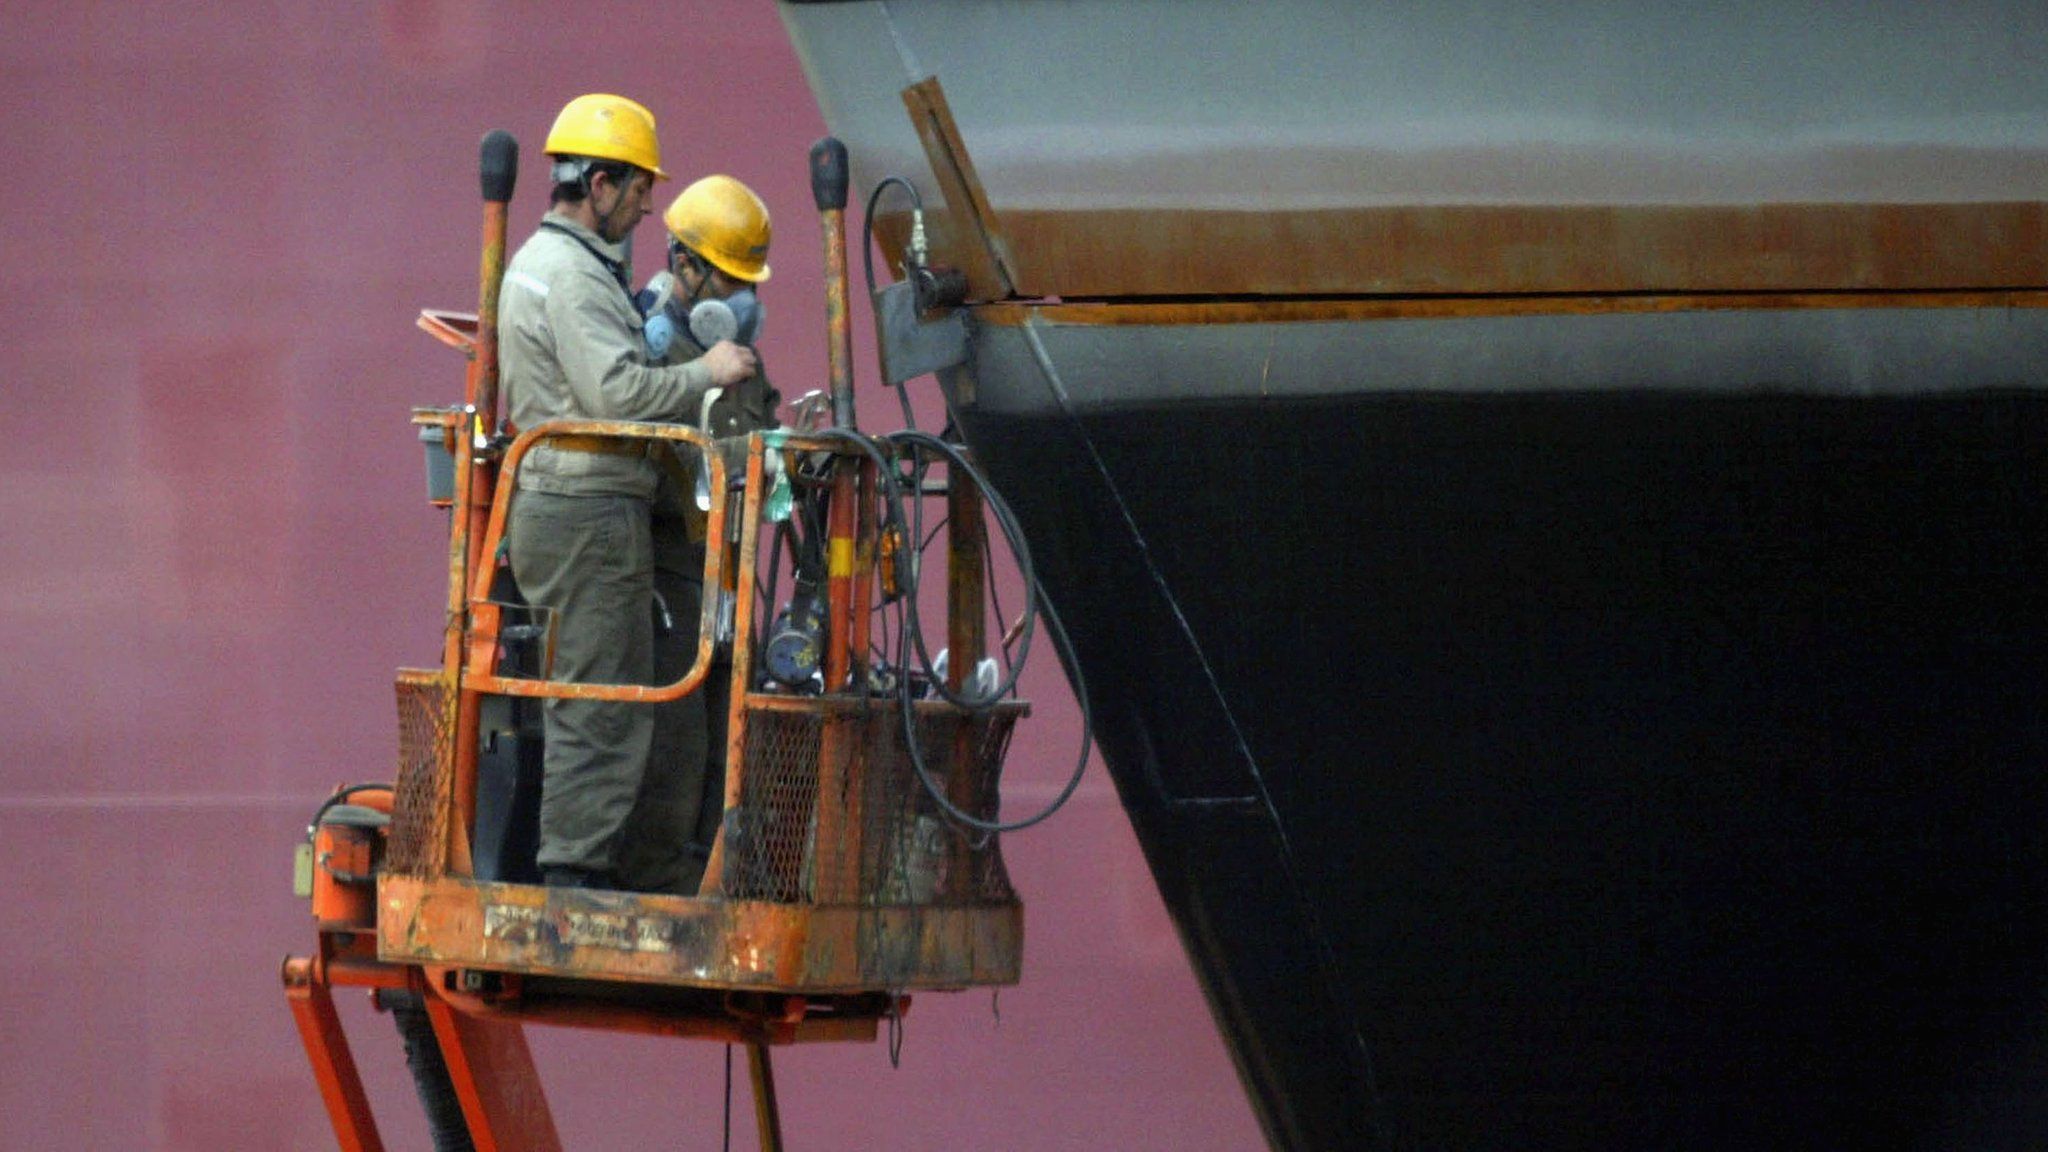 Workers of Daewoo Shipbuilding & Marine Engineering (DSME) work on a ship in Geoje Island, South Korea